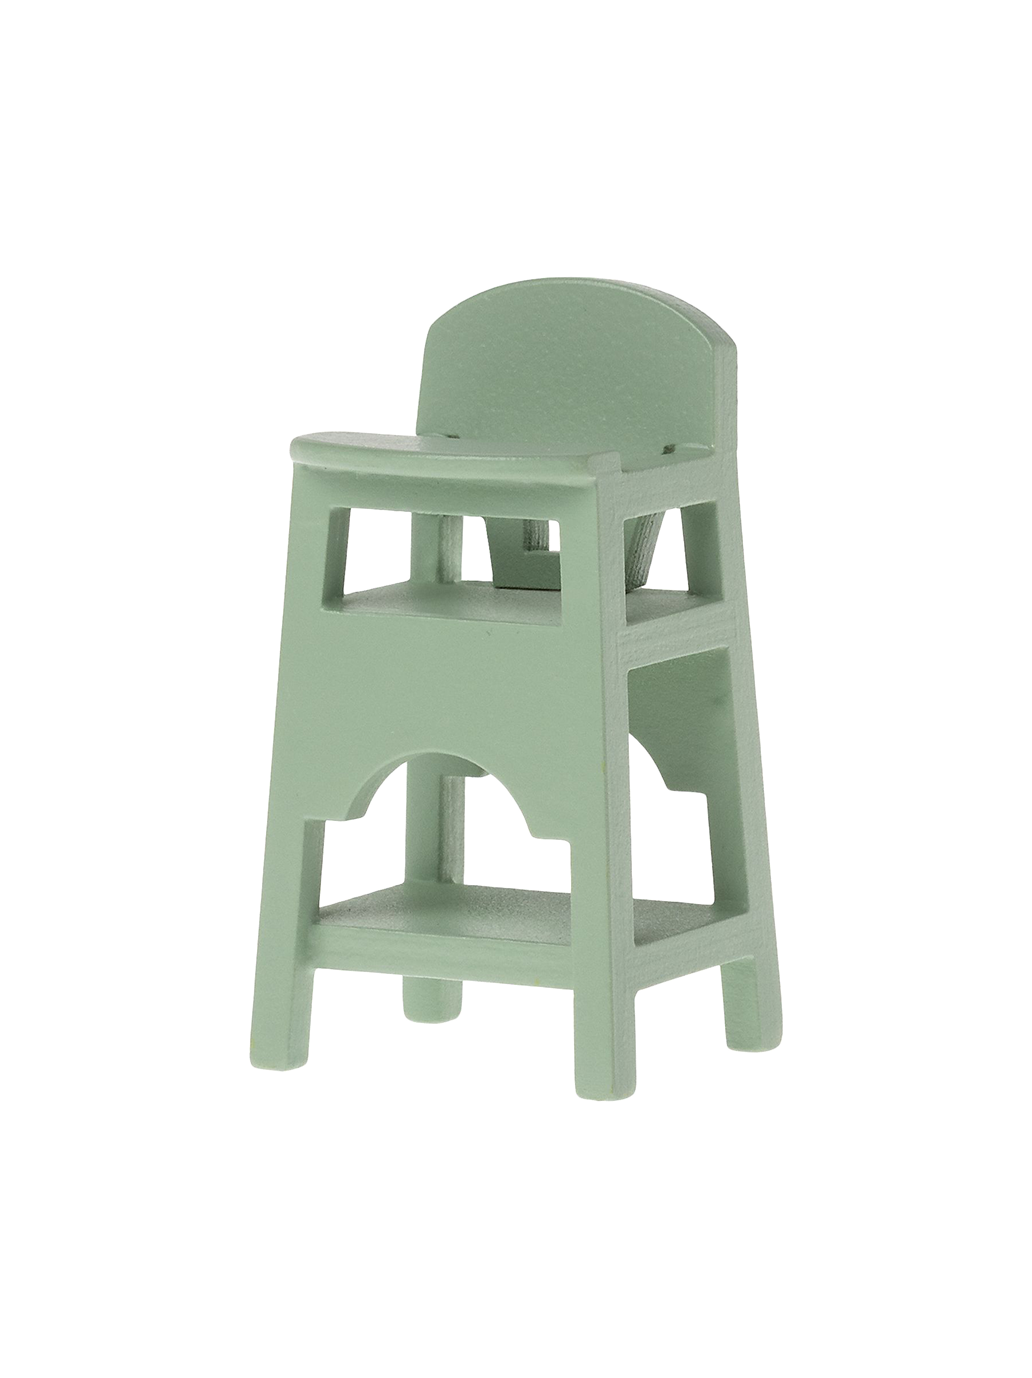 Une chaise haute miniature